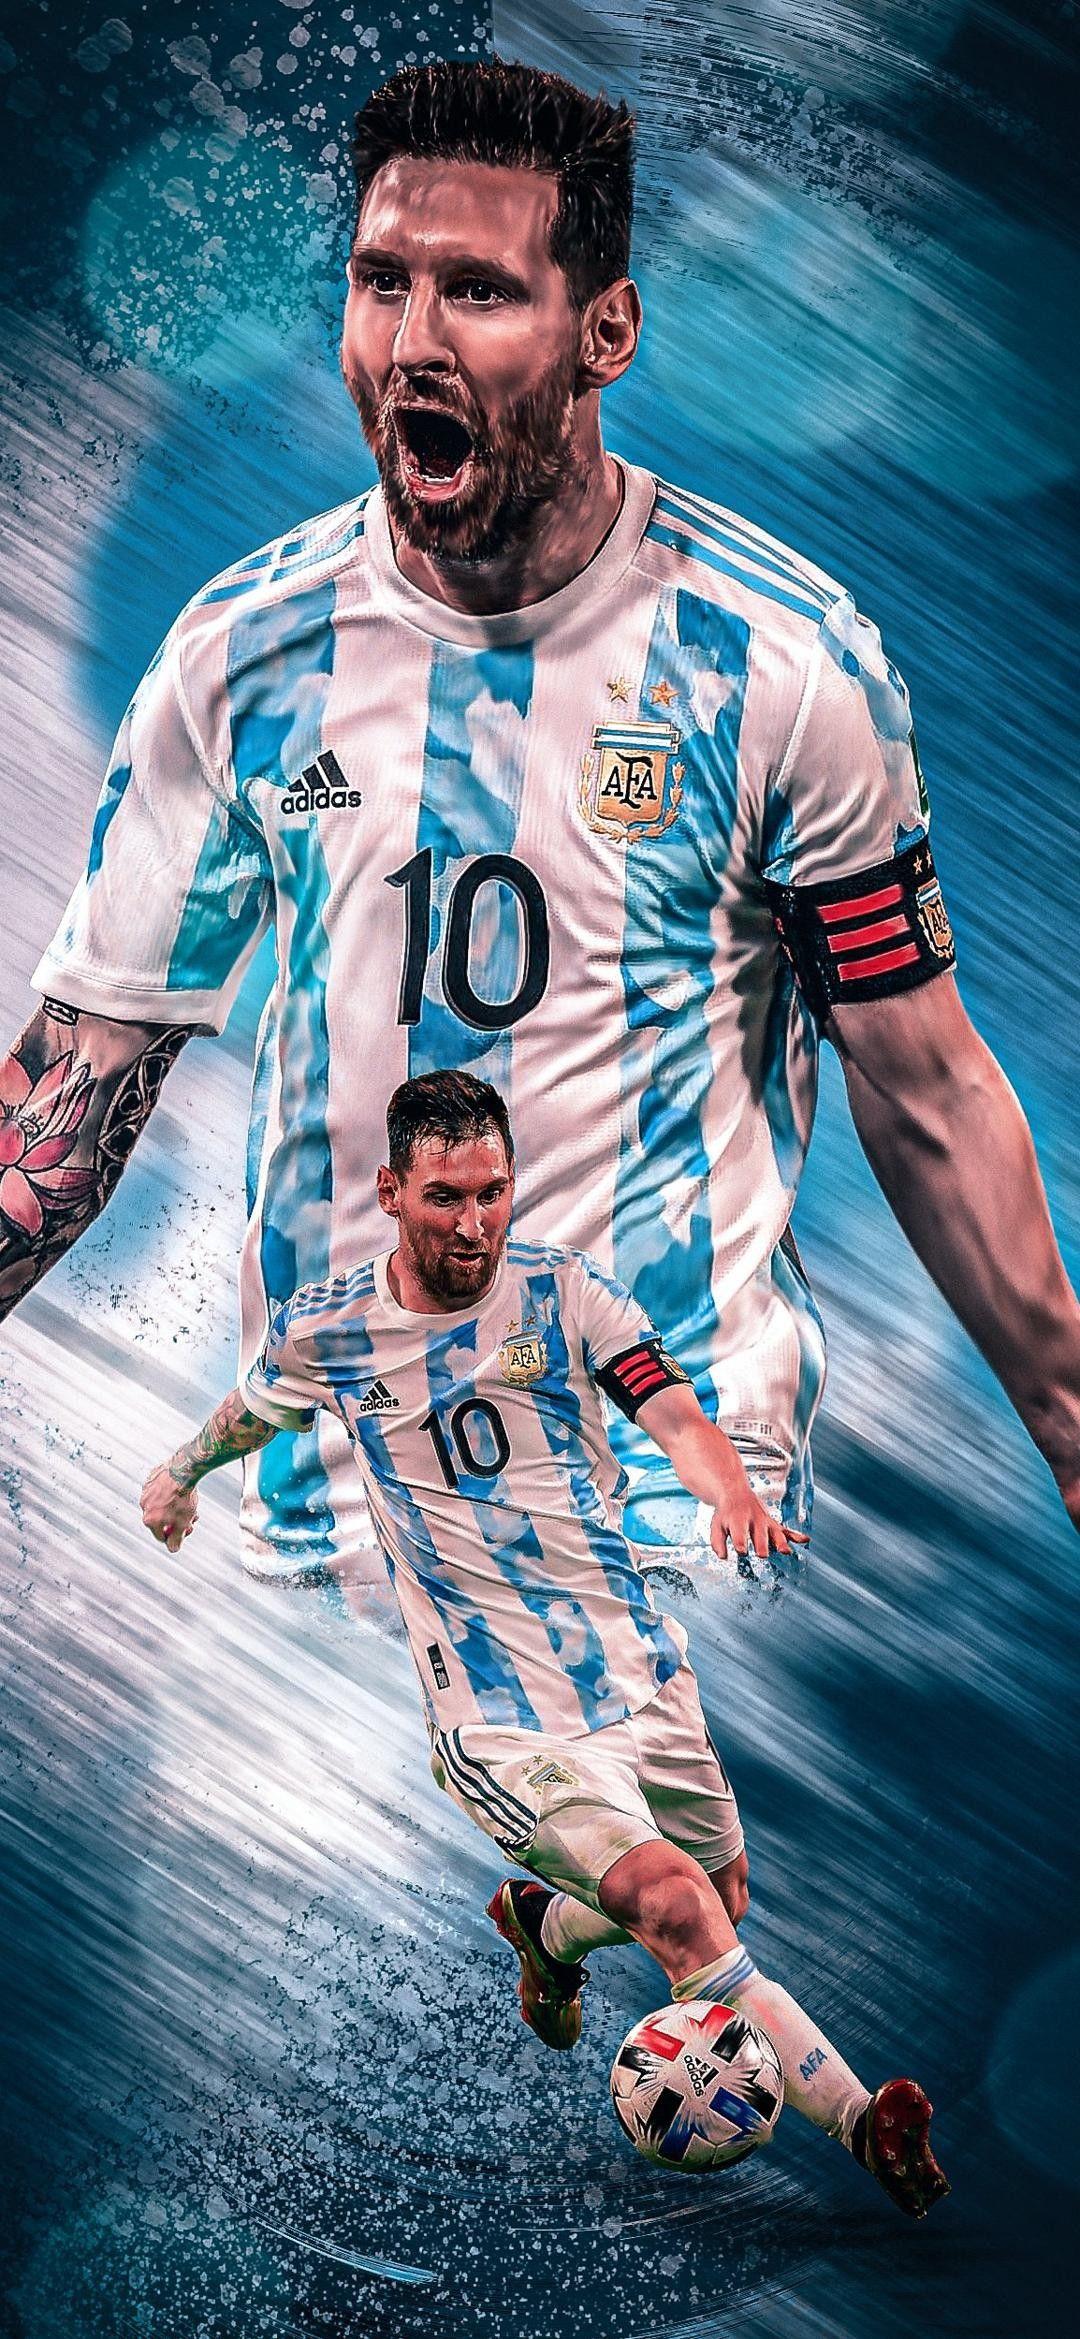 Lionel Messi Argentine Footballer Fotos De Imagenes